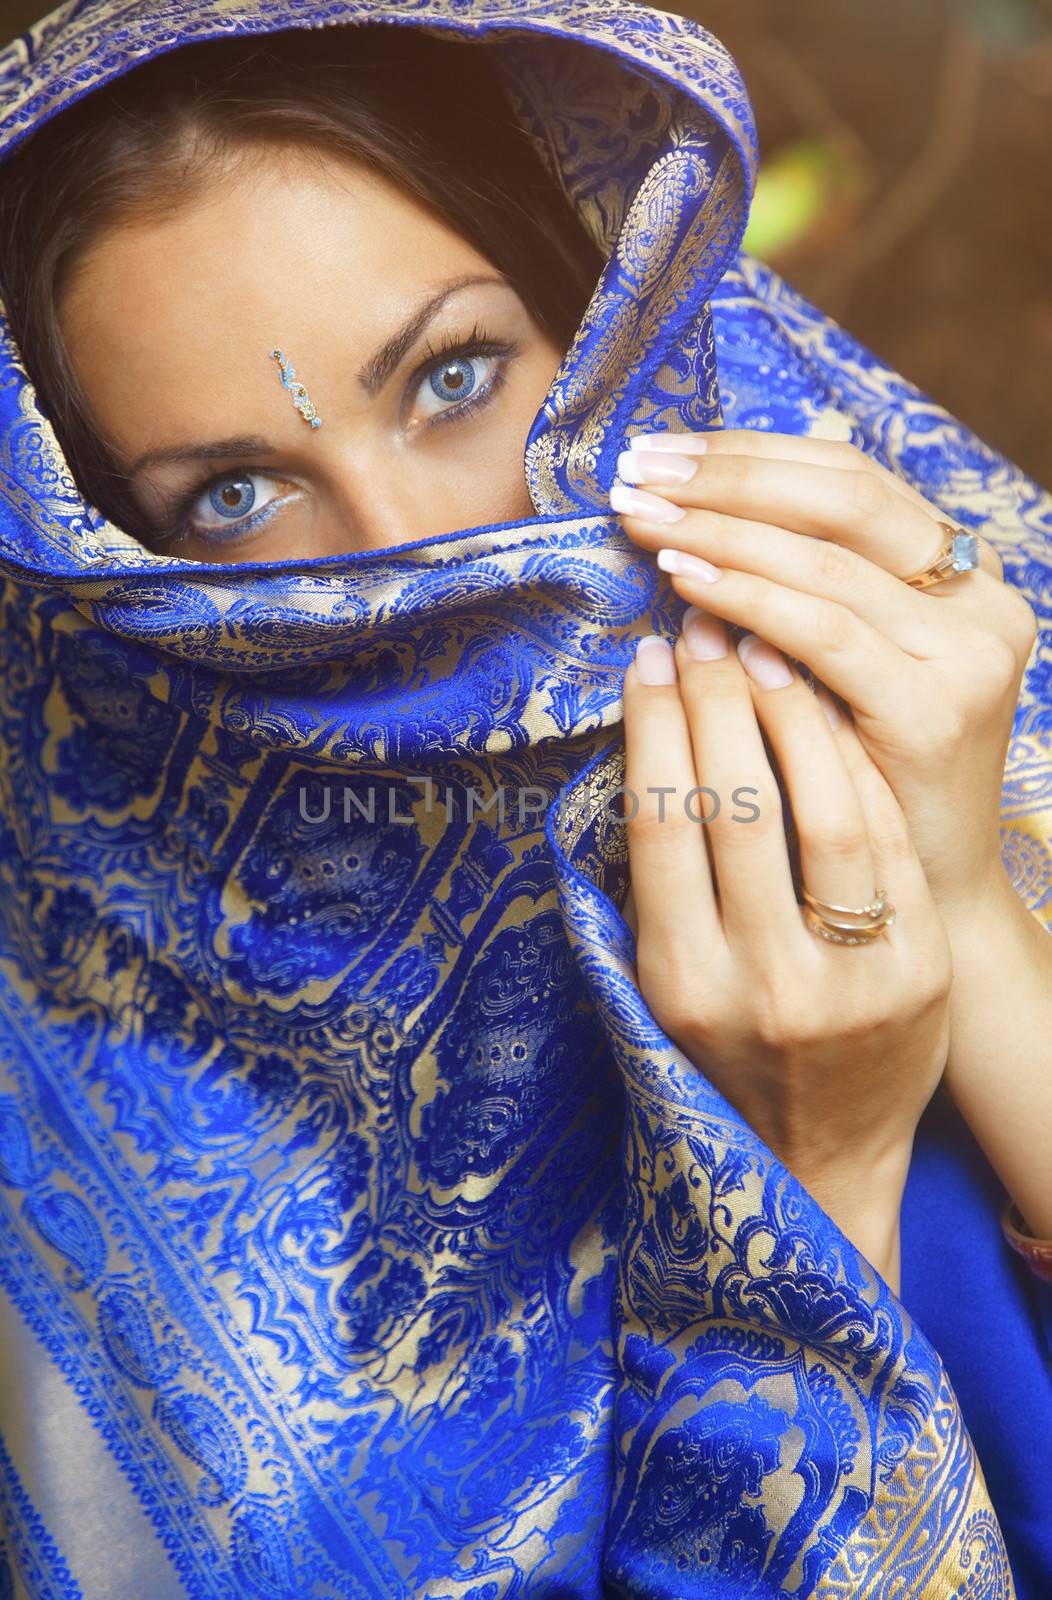 Woman in sari by Novic